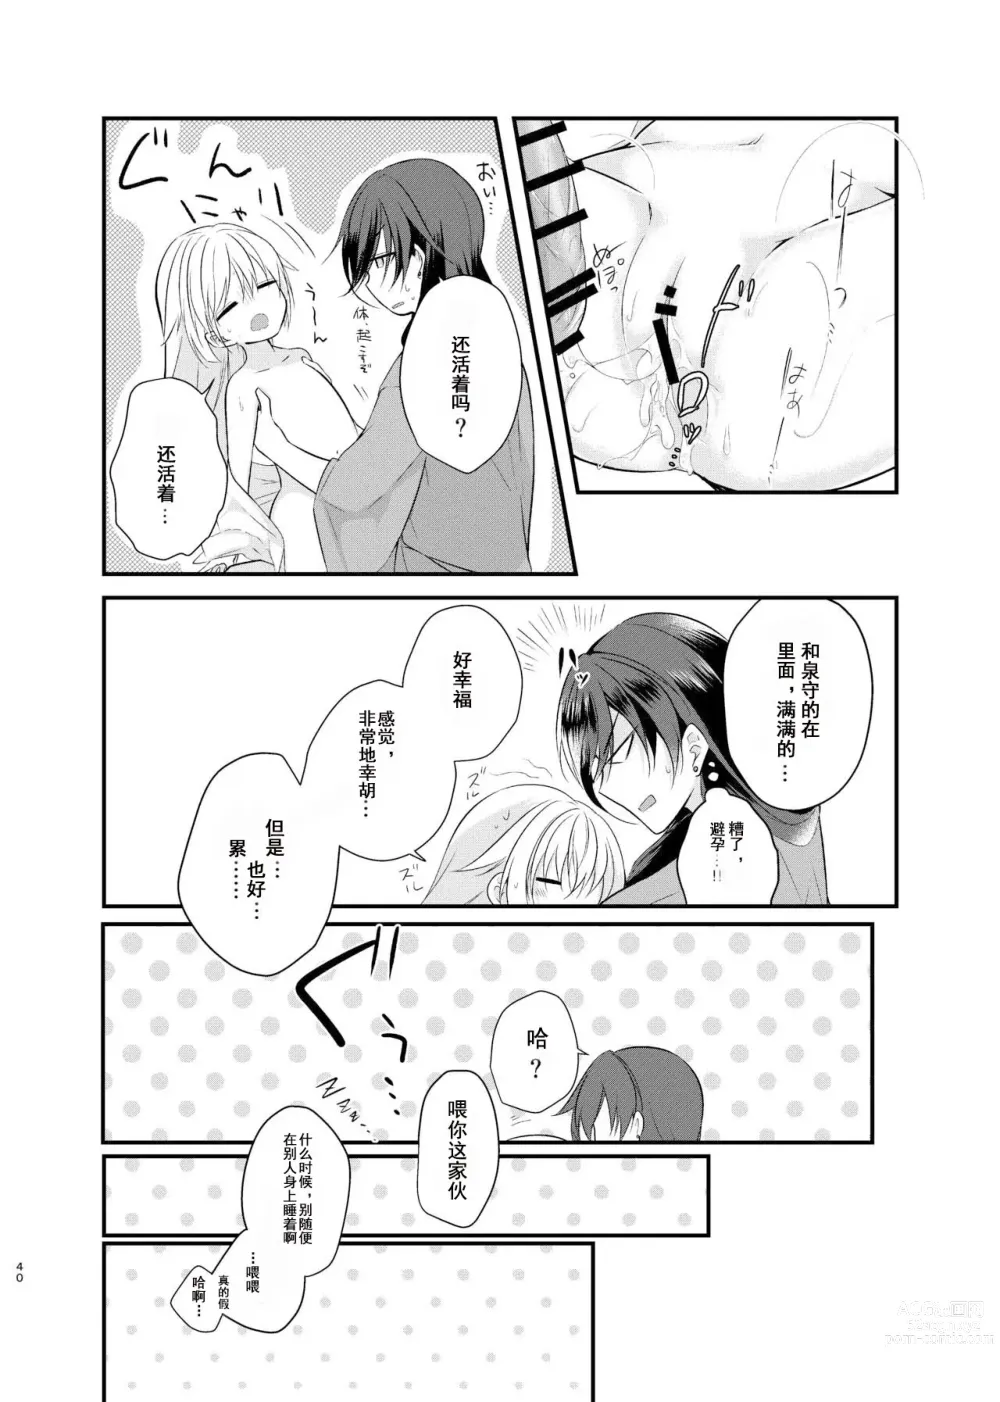 Page 27 of doujinshi 晨光下的你